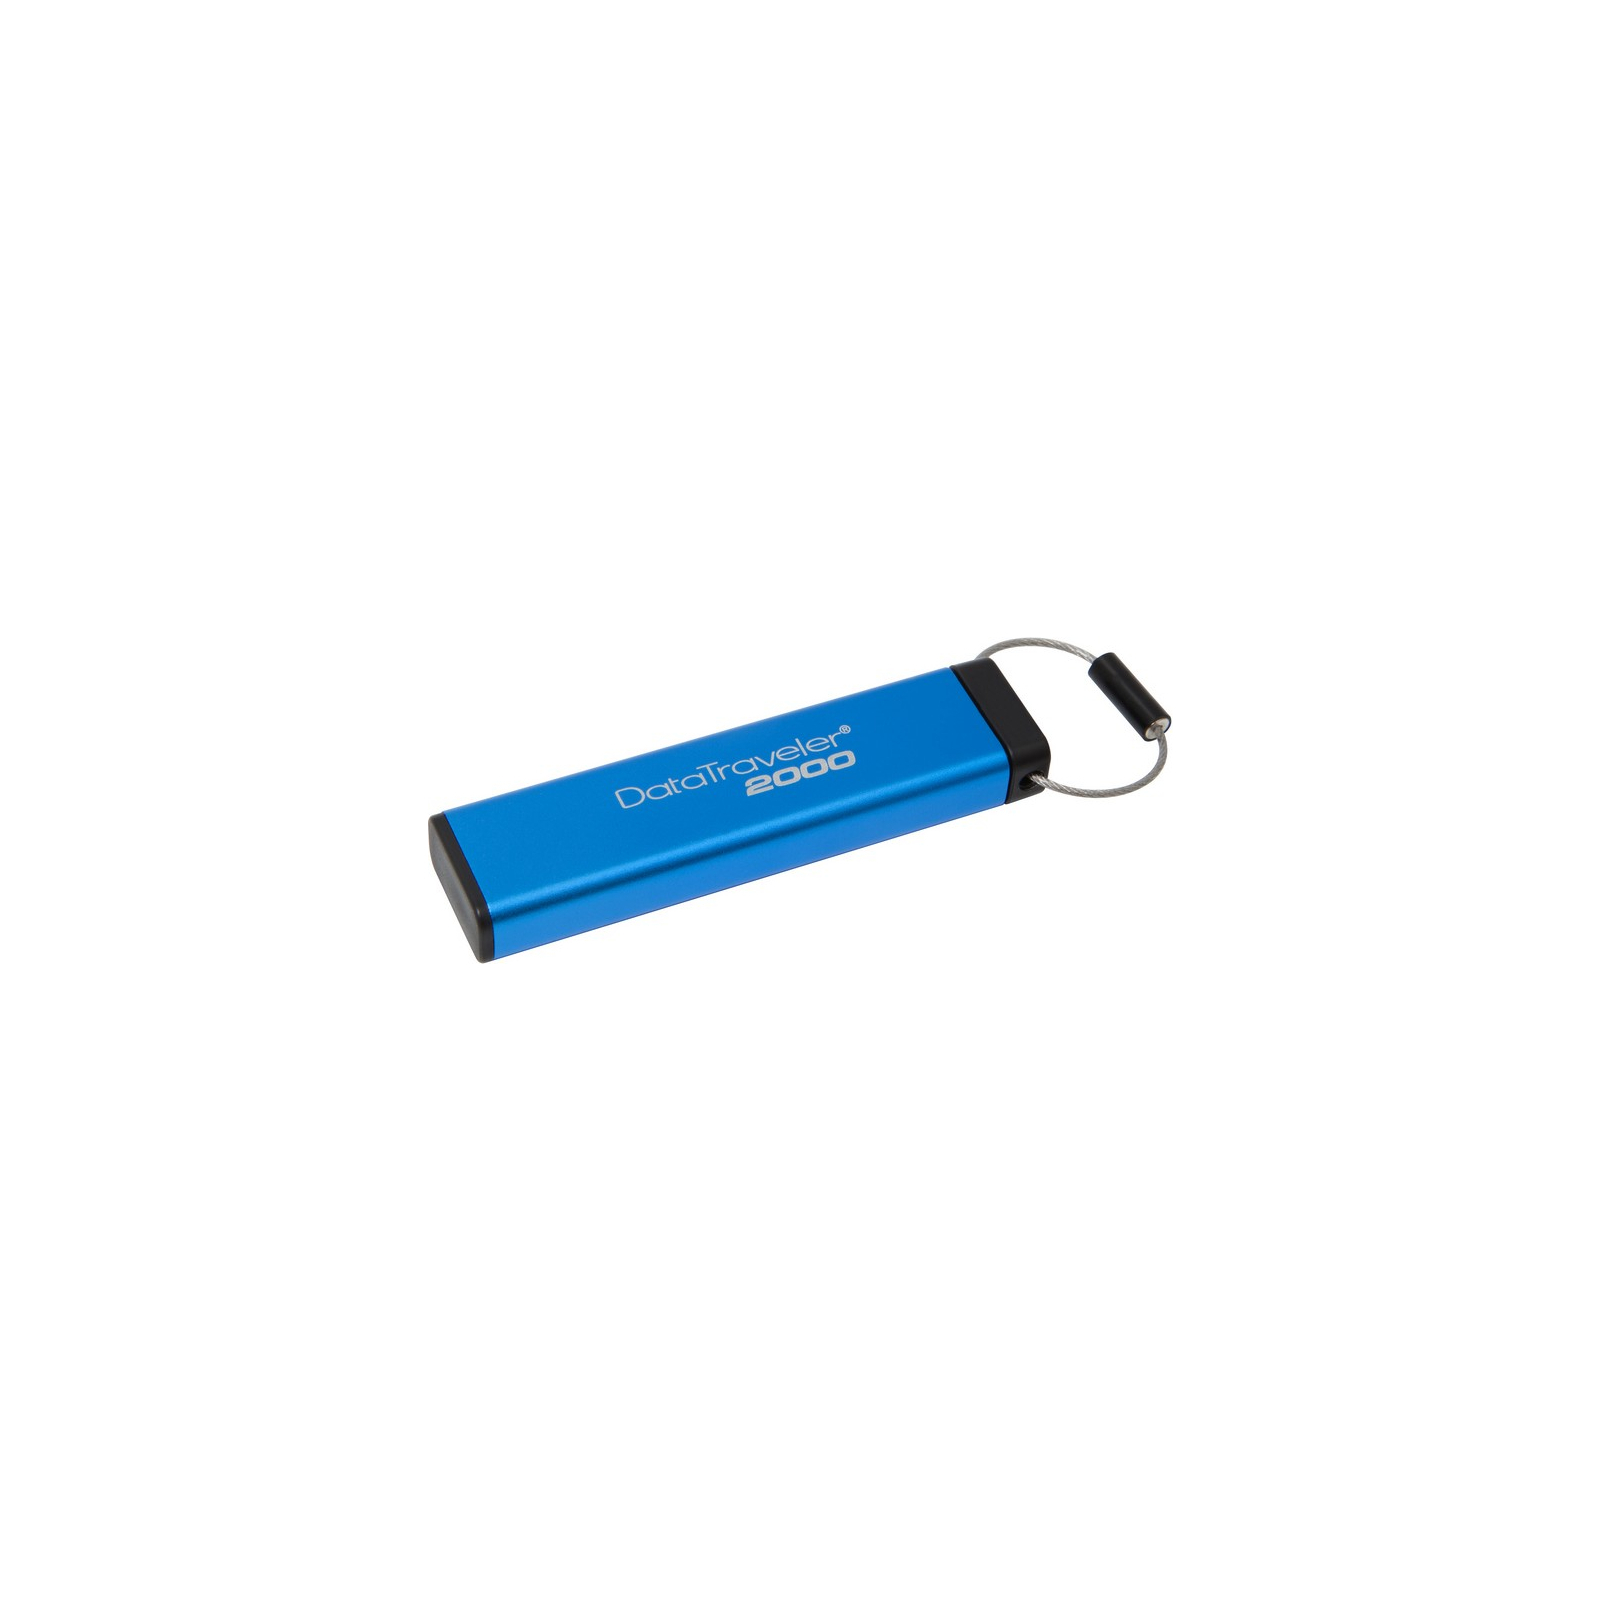 USB флеш накопитель Kingston 16GB DT 2000 Metal Security USB 3.0 (DT2000/16GB) изображение 2